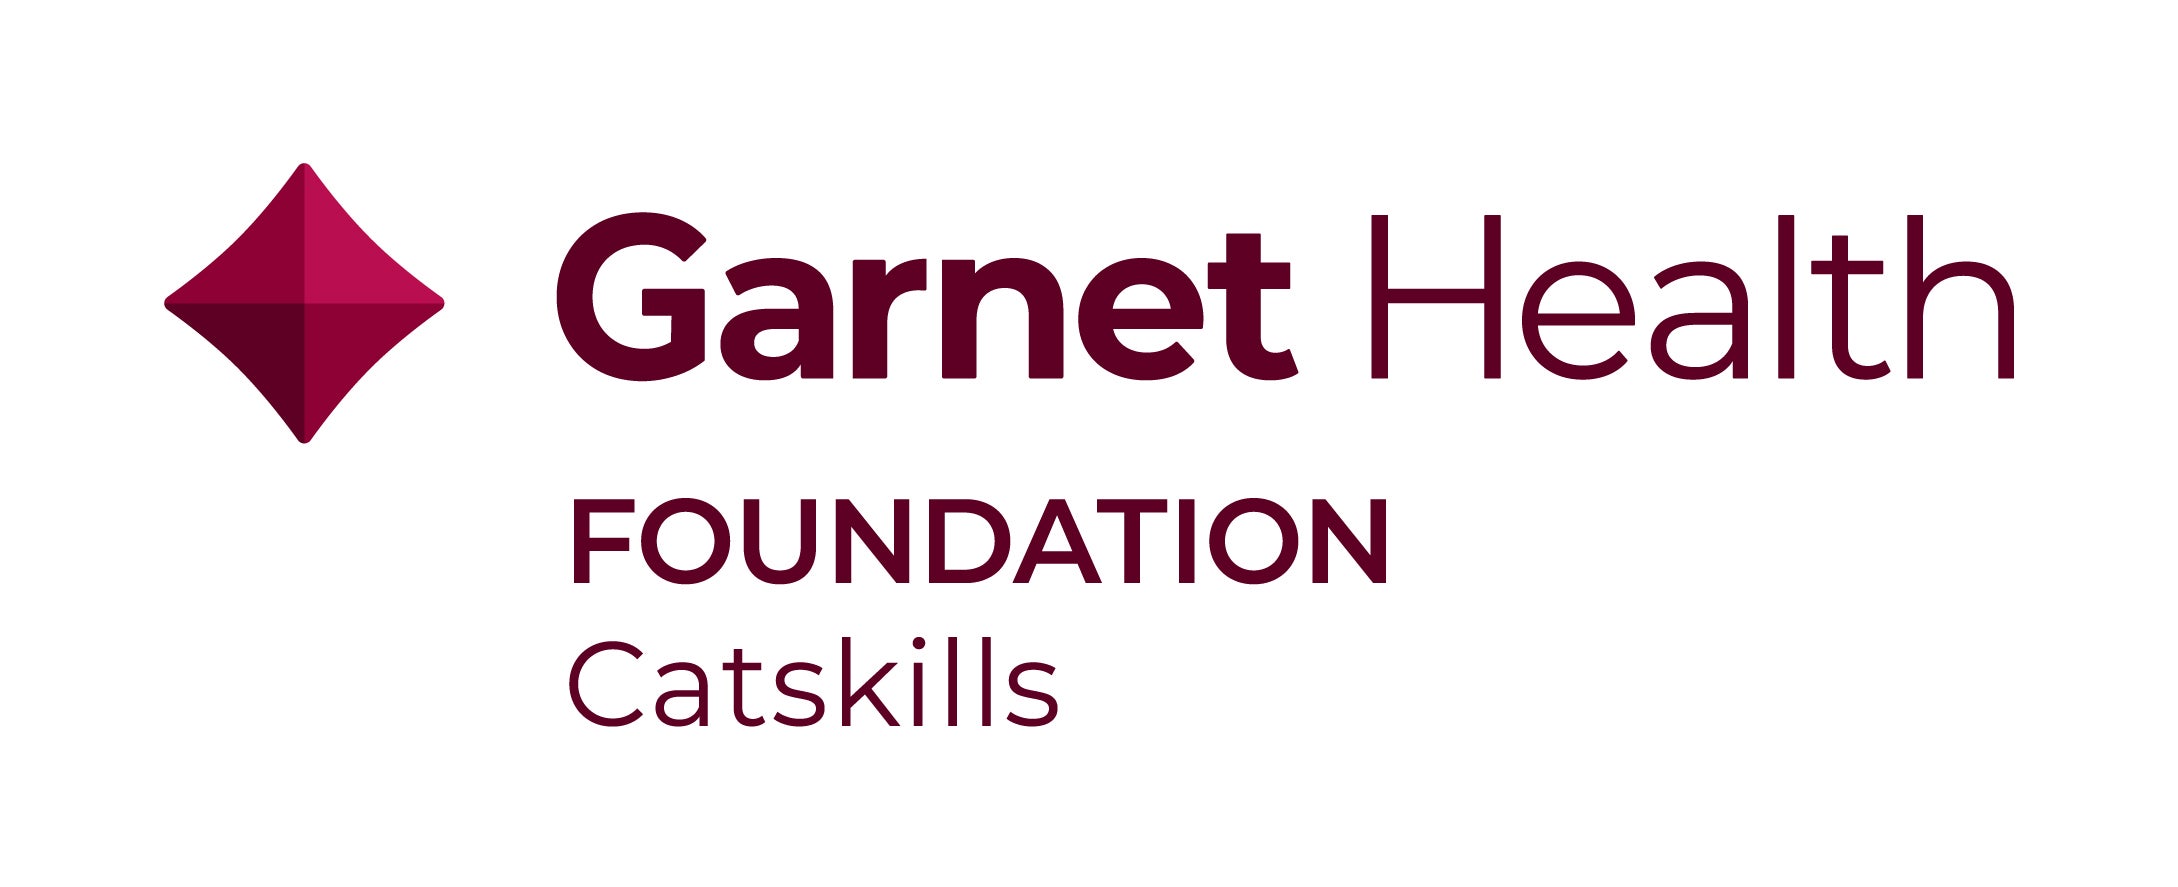 Garnet Health Foundation - Catskills